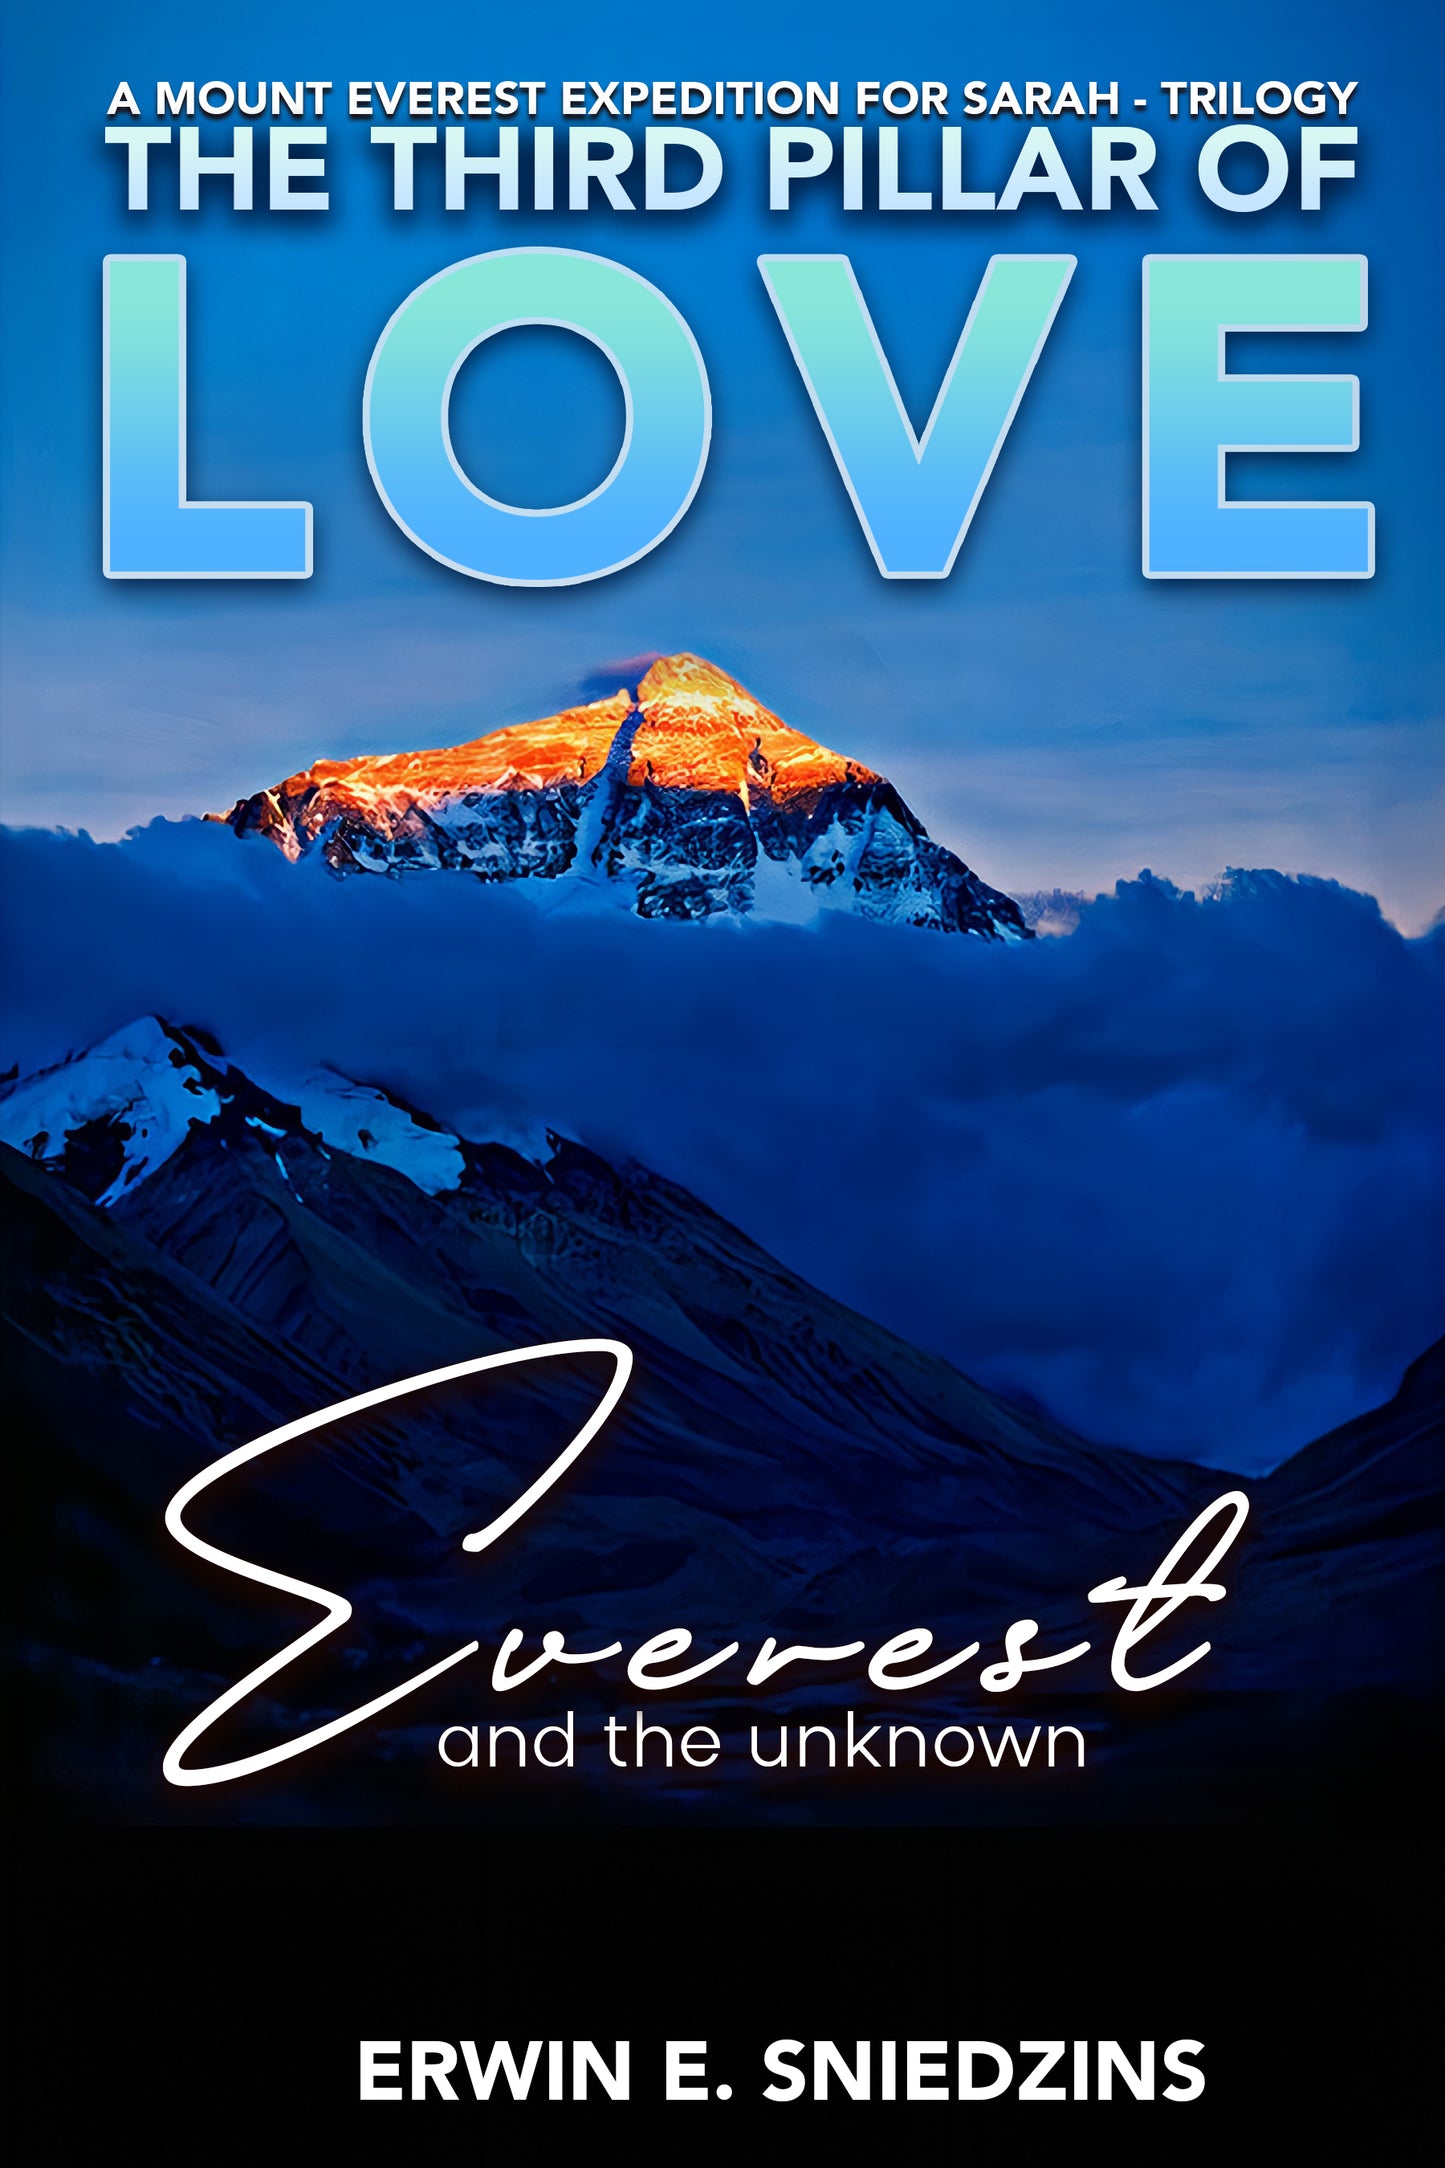 The Third Pillar of Love-Everest: Climb for Hope trilogy series